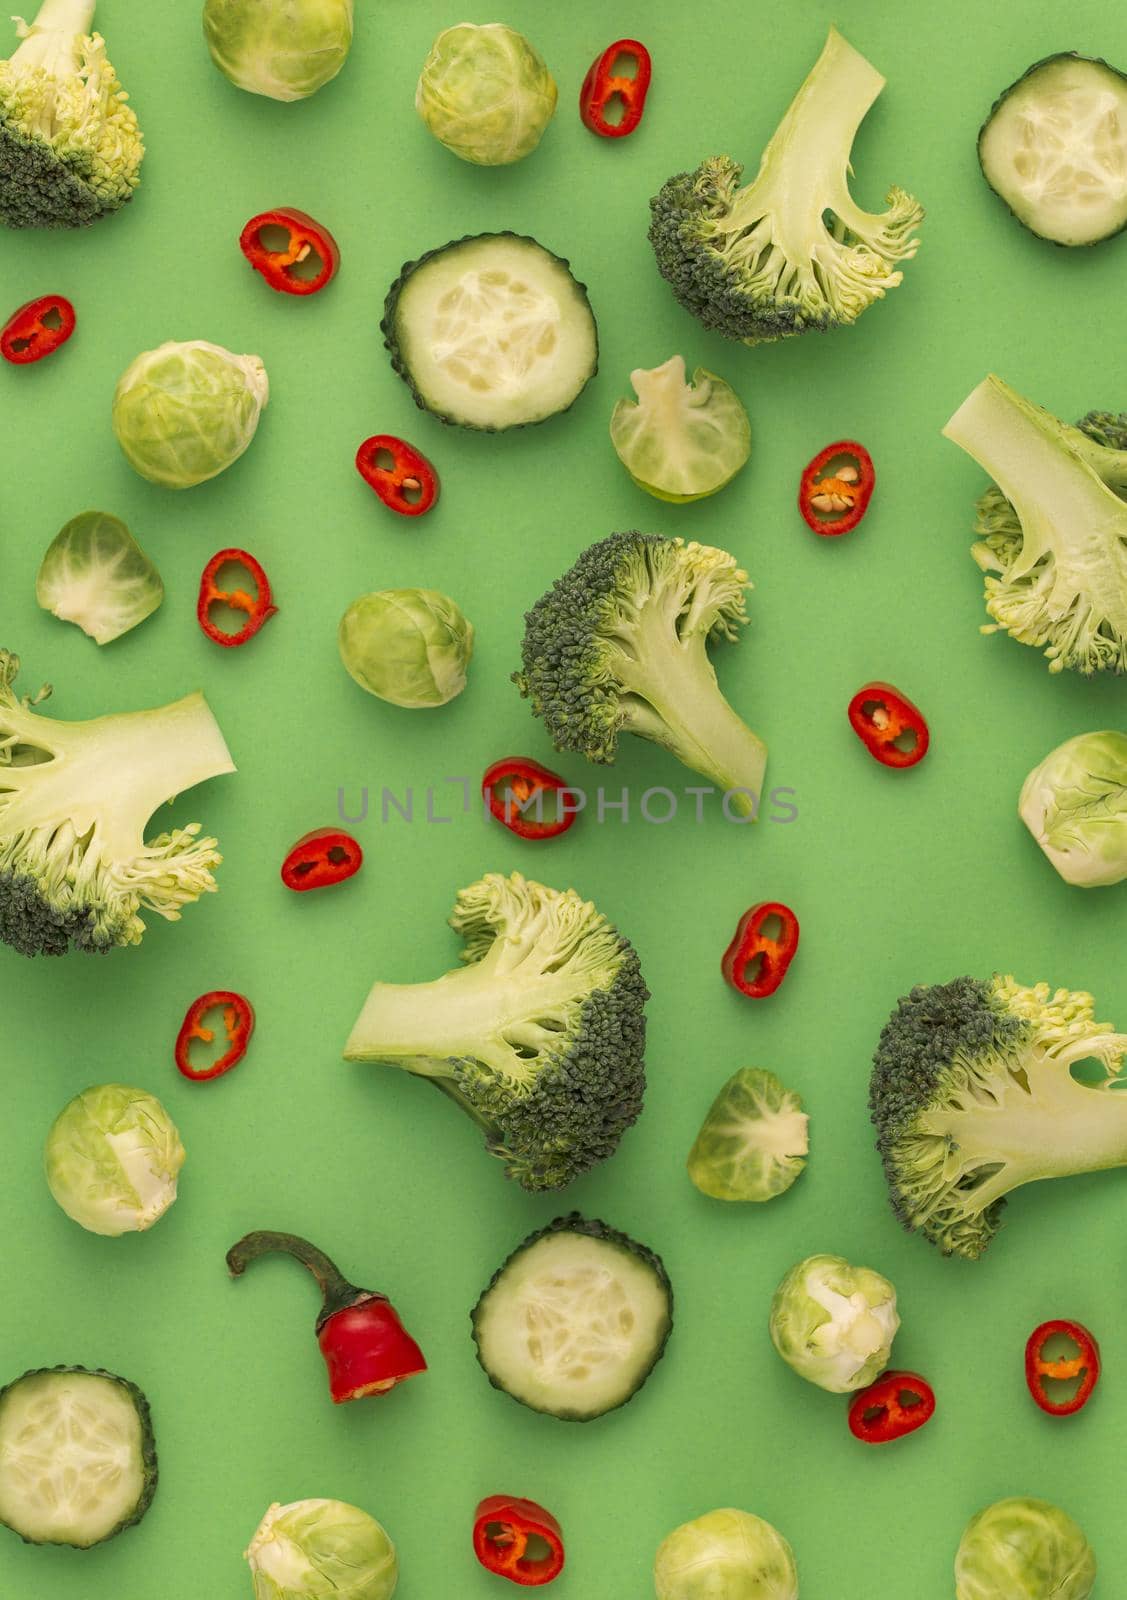 Colourful vegetables concept by its_al_dente